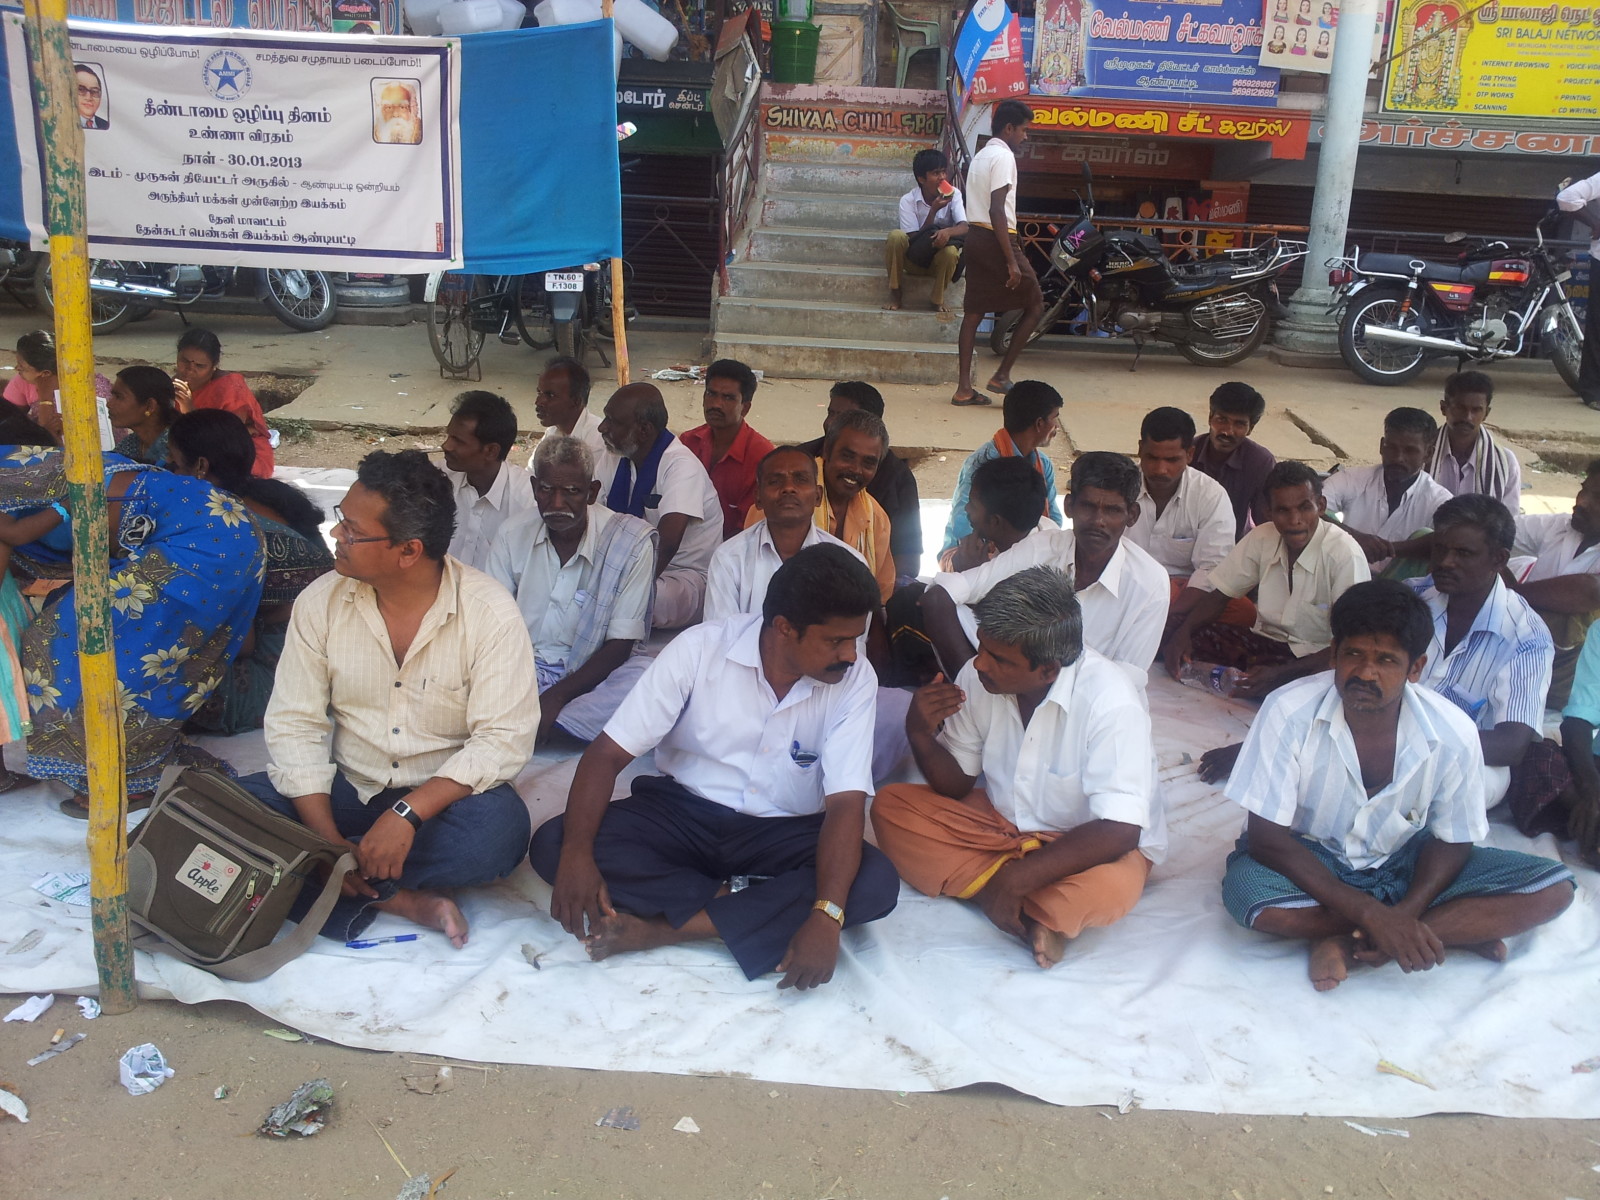  Anti-caste street protest organized by Dalits in Aundipatti, Tamil Nadu.